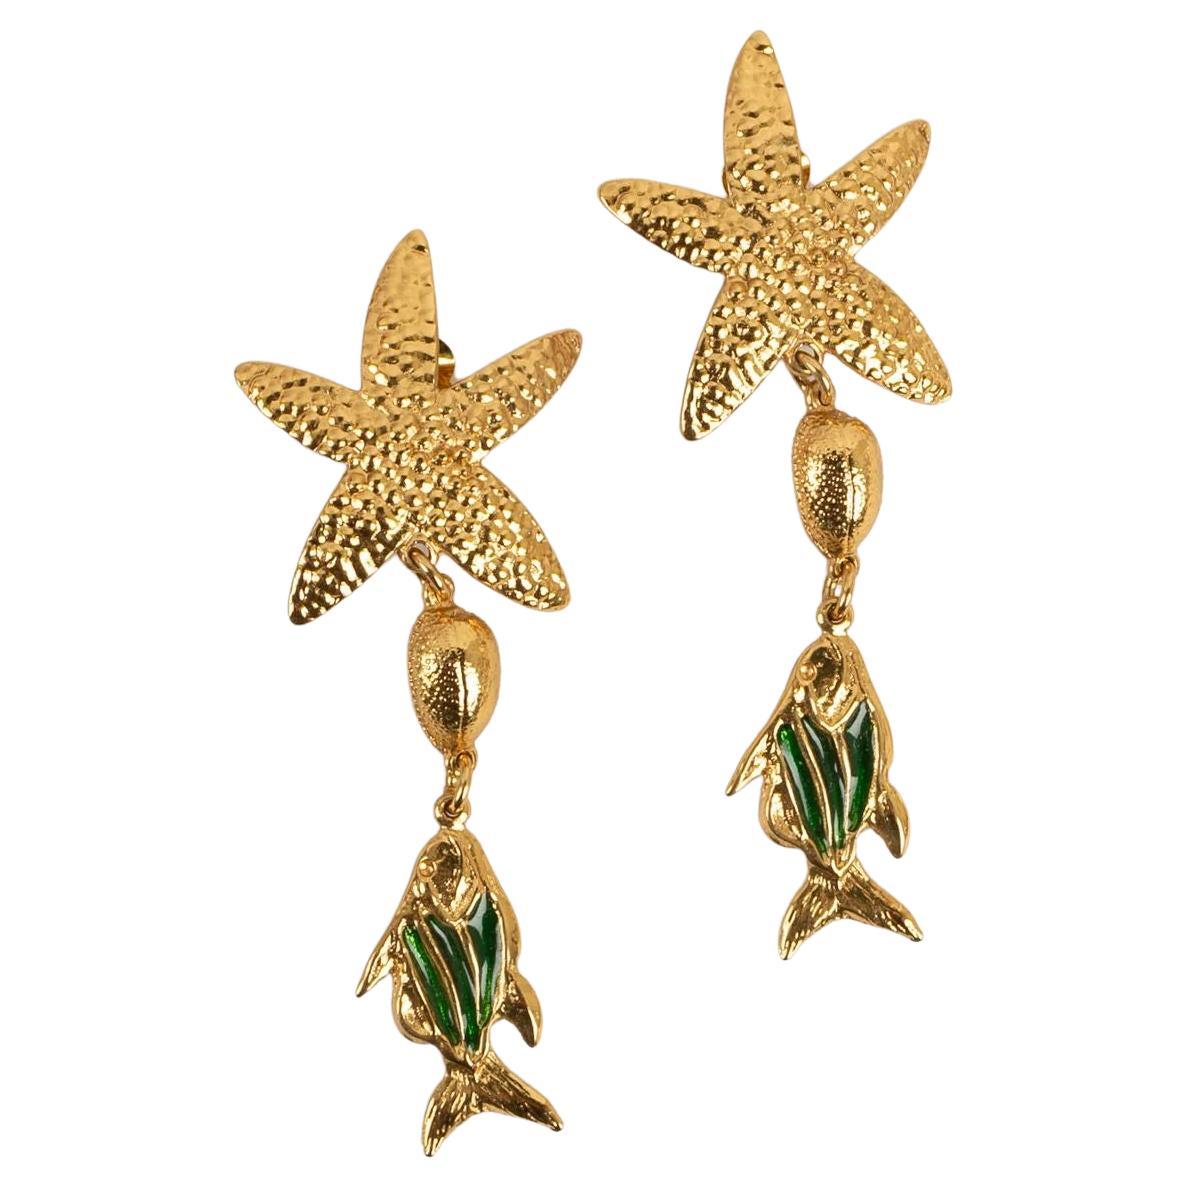 Yves Saint Laurent Earrings in Gold Metal and Green Enamel For Sale